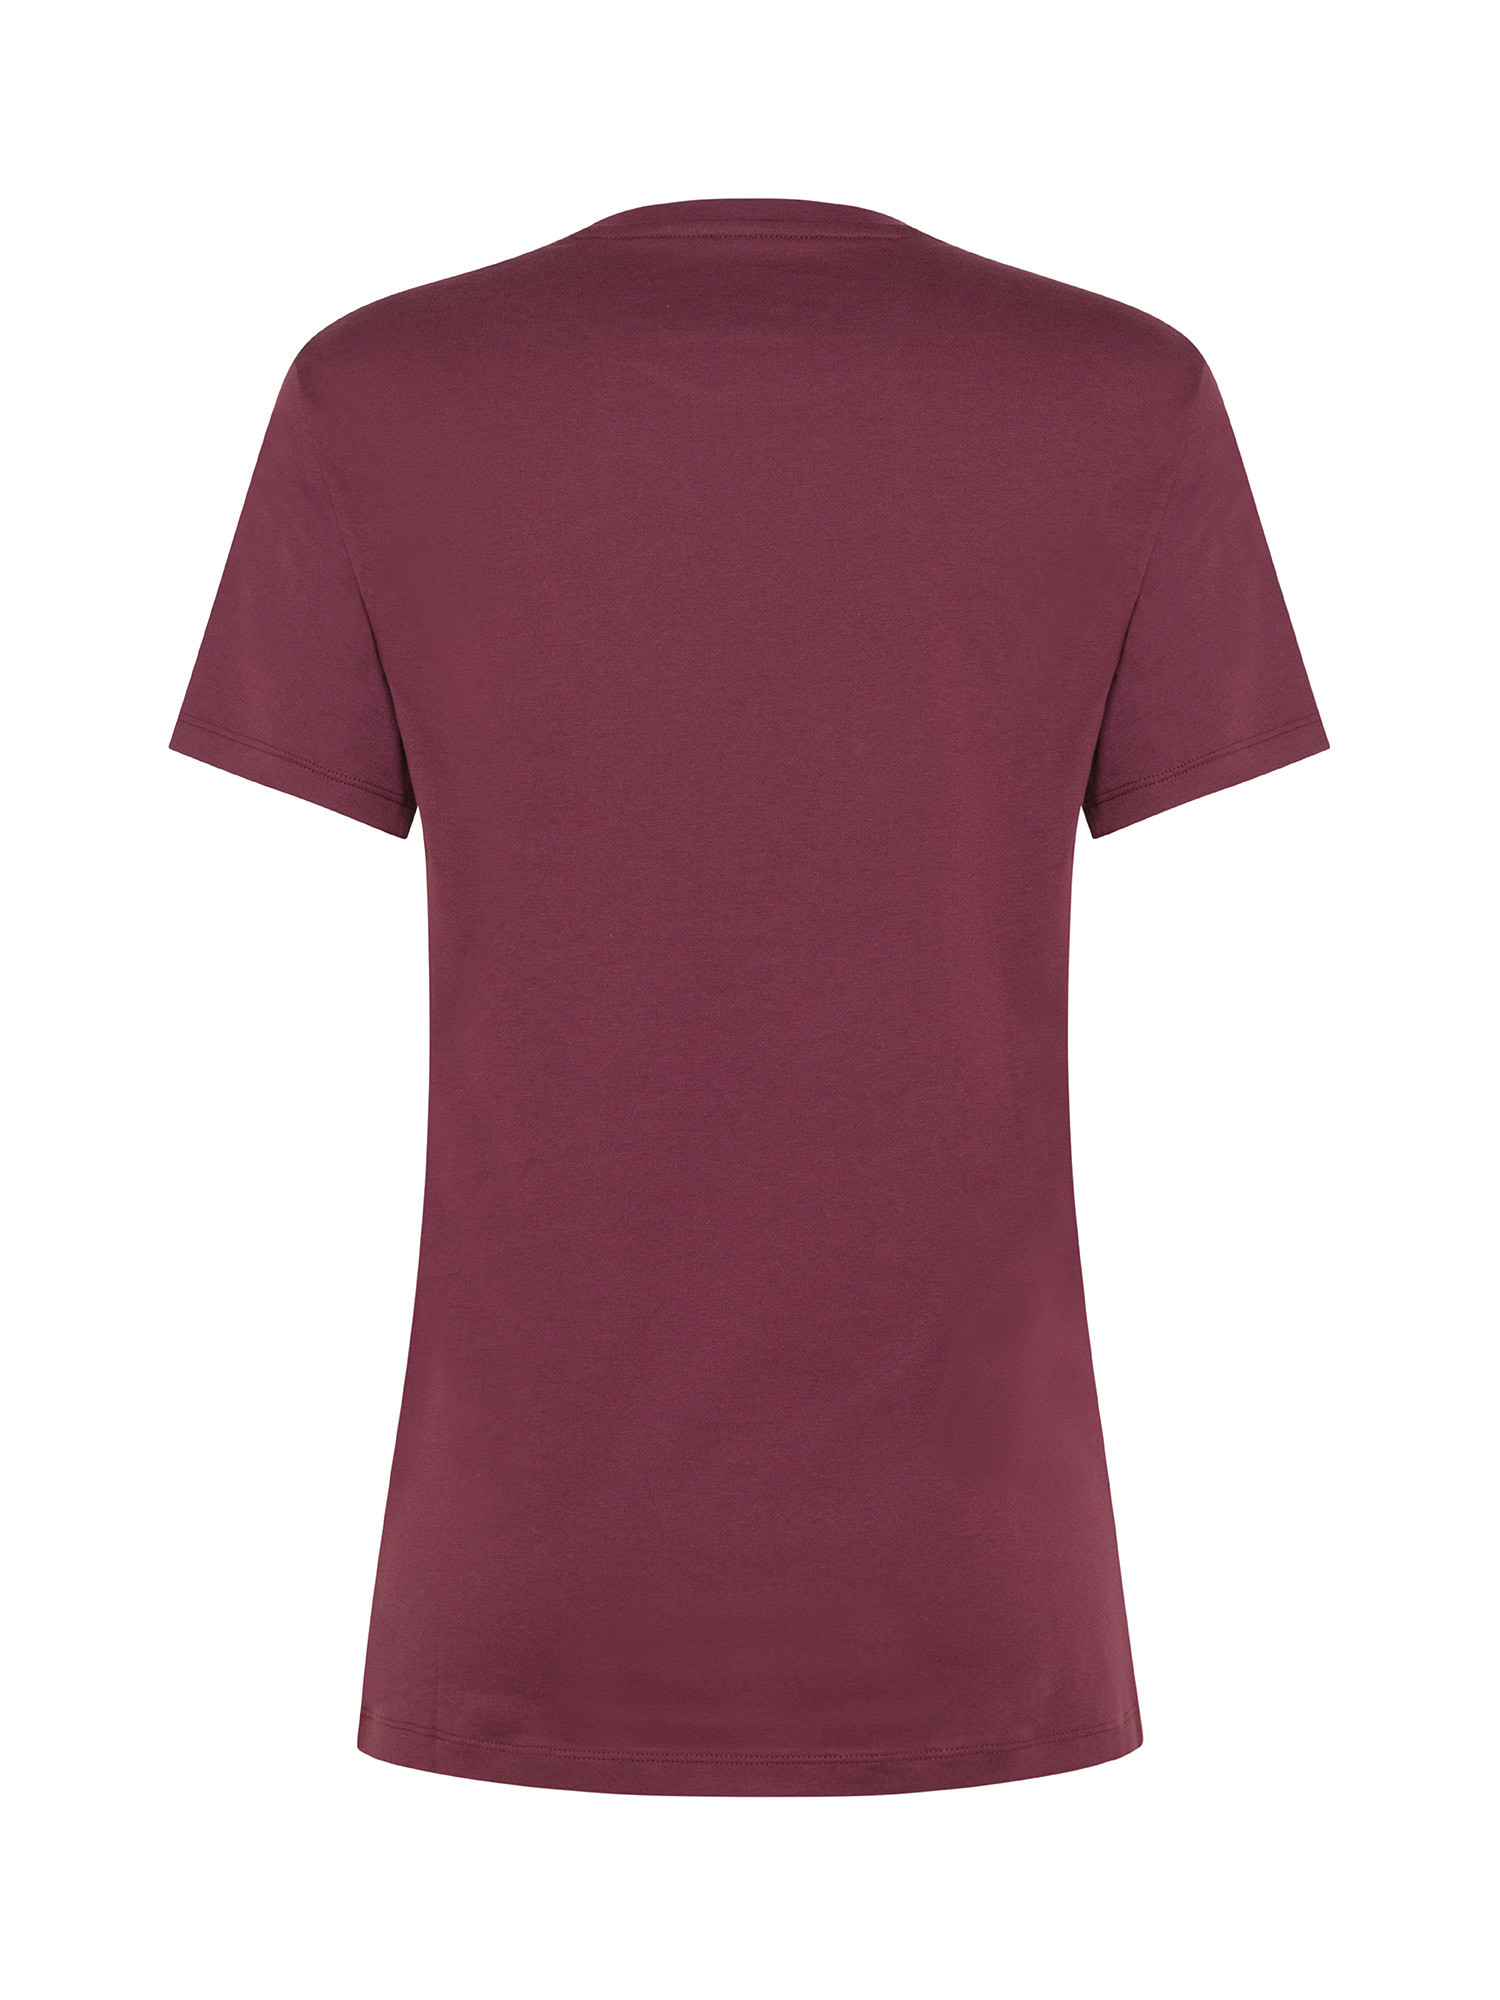 T-shirt, Red Bordeaux, large image number 1